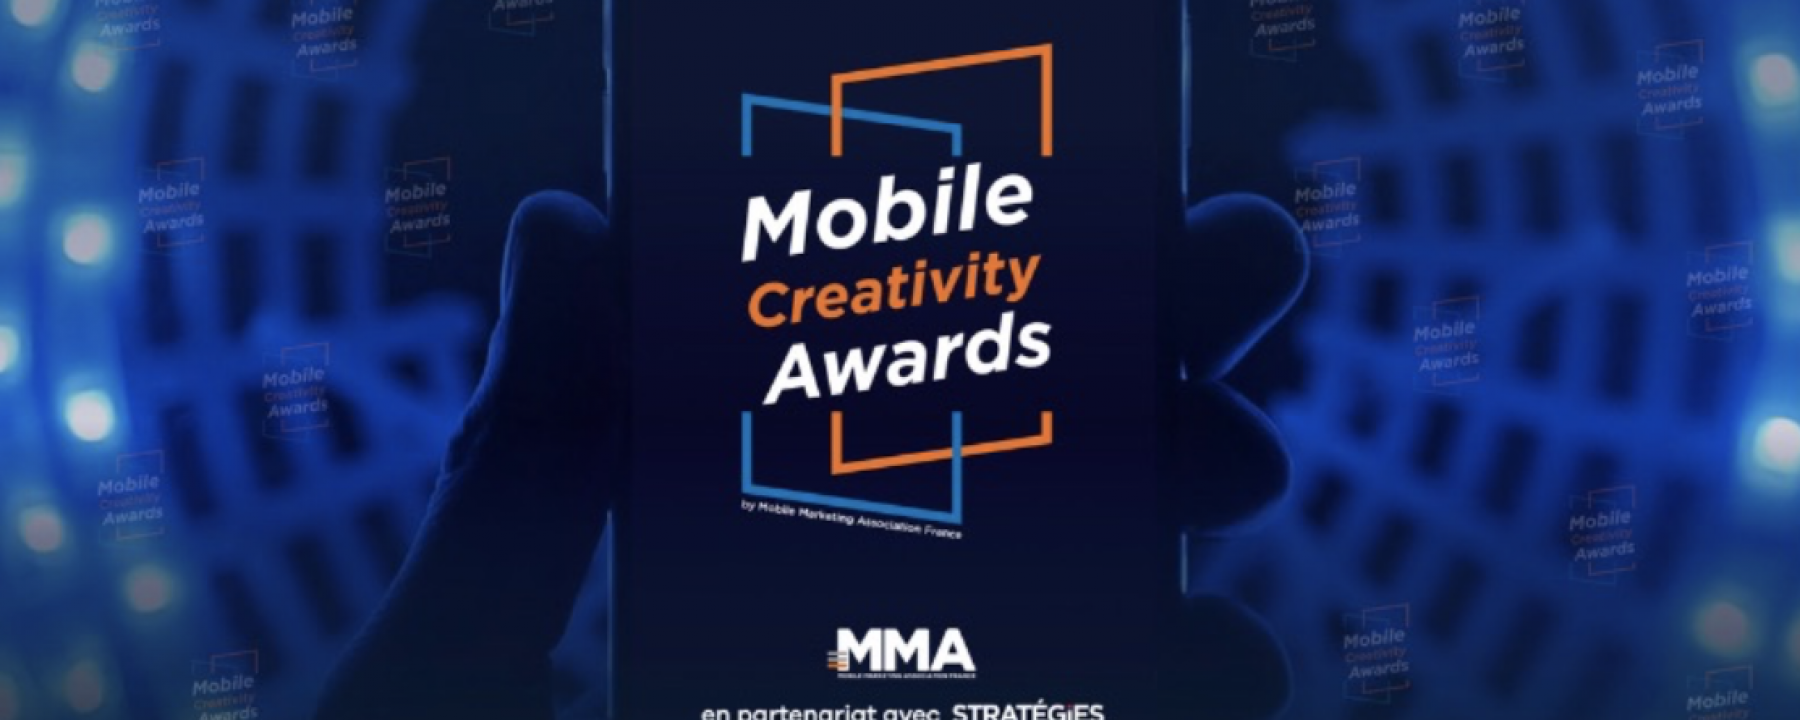 Mobile creativity awards par la MMA